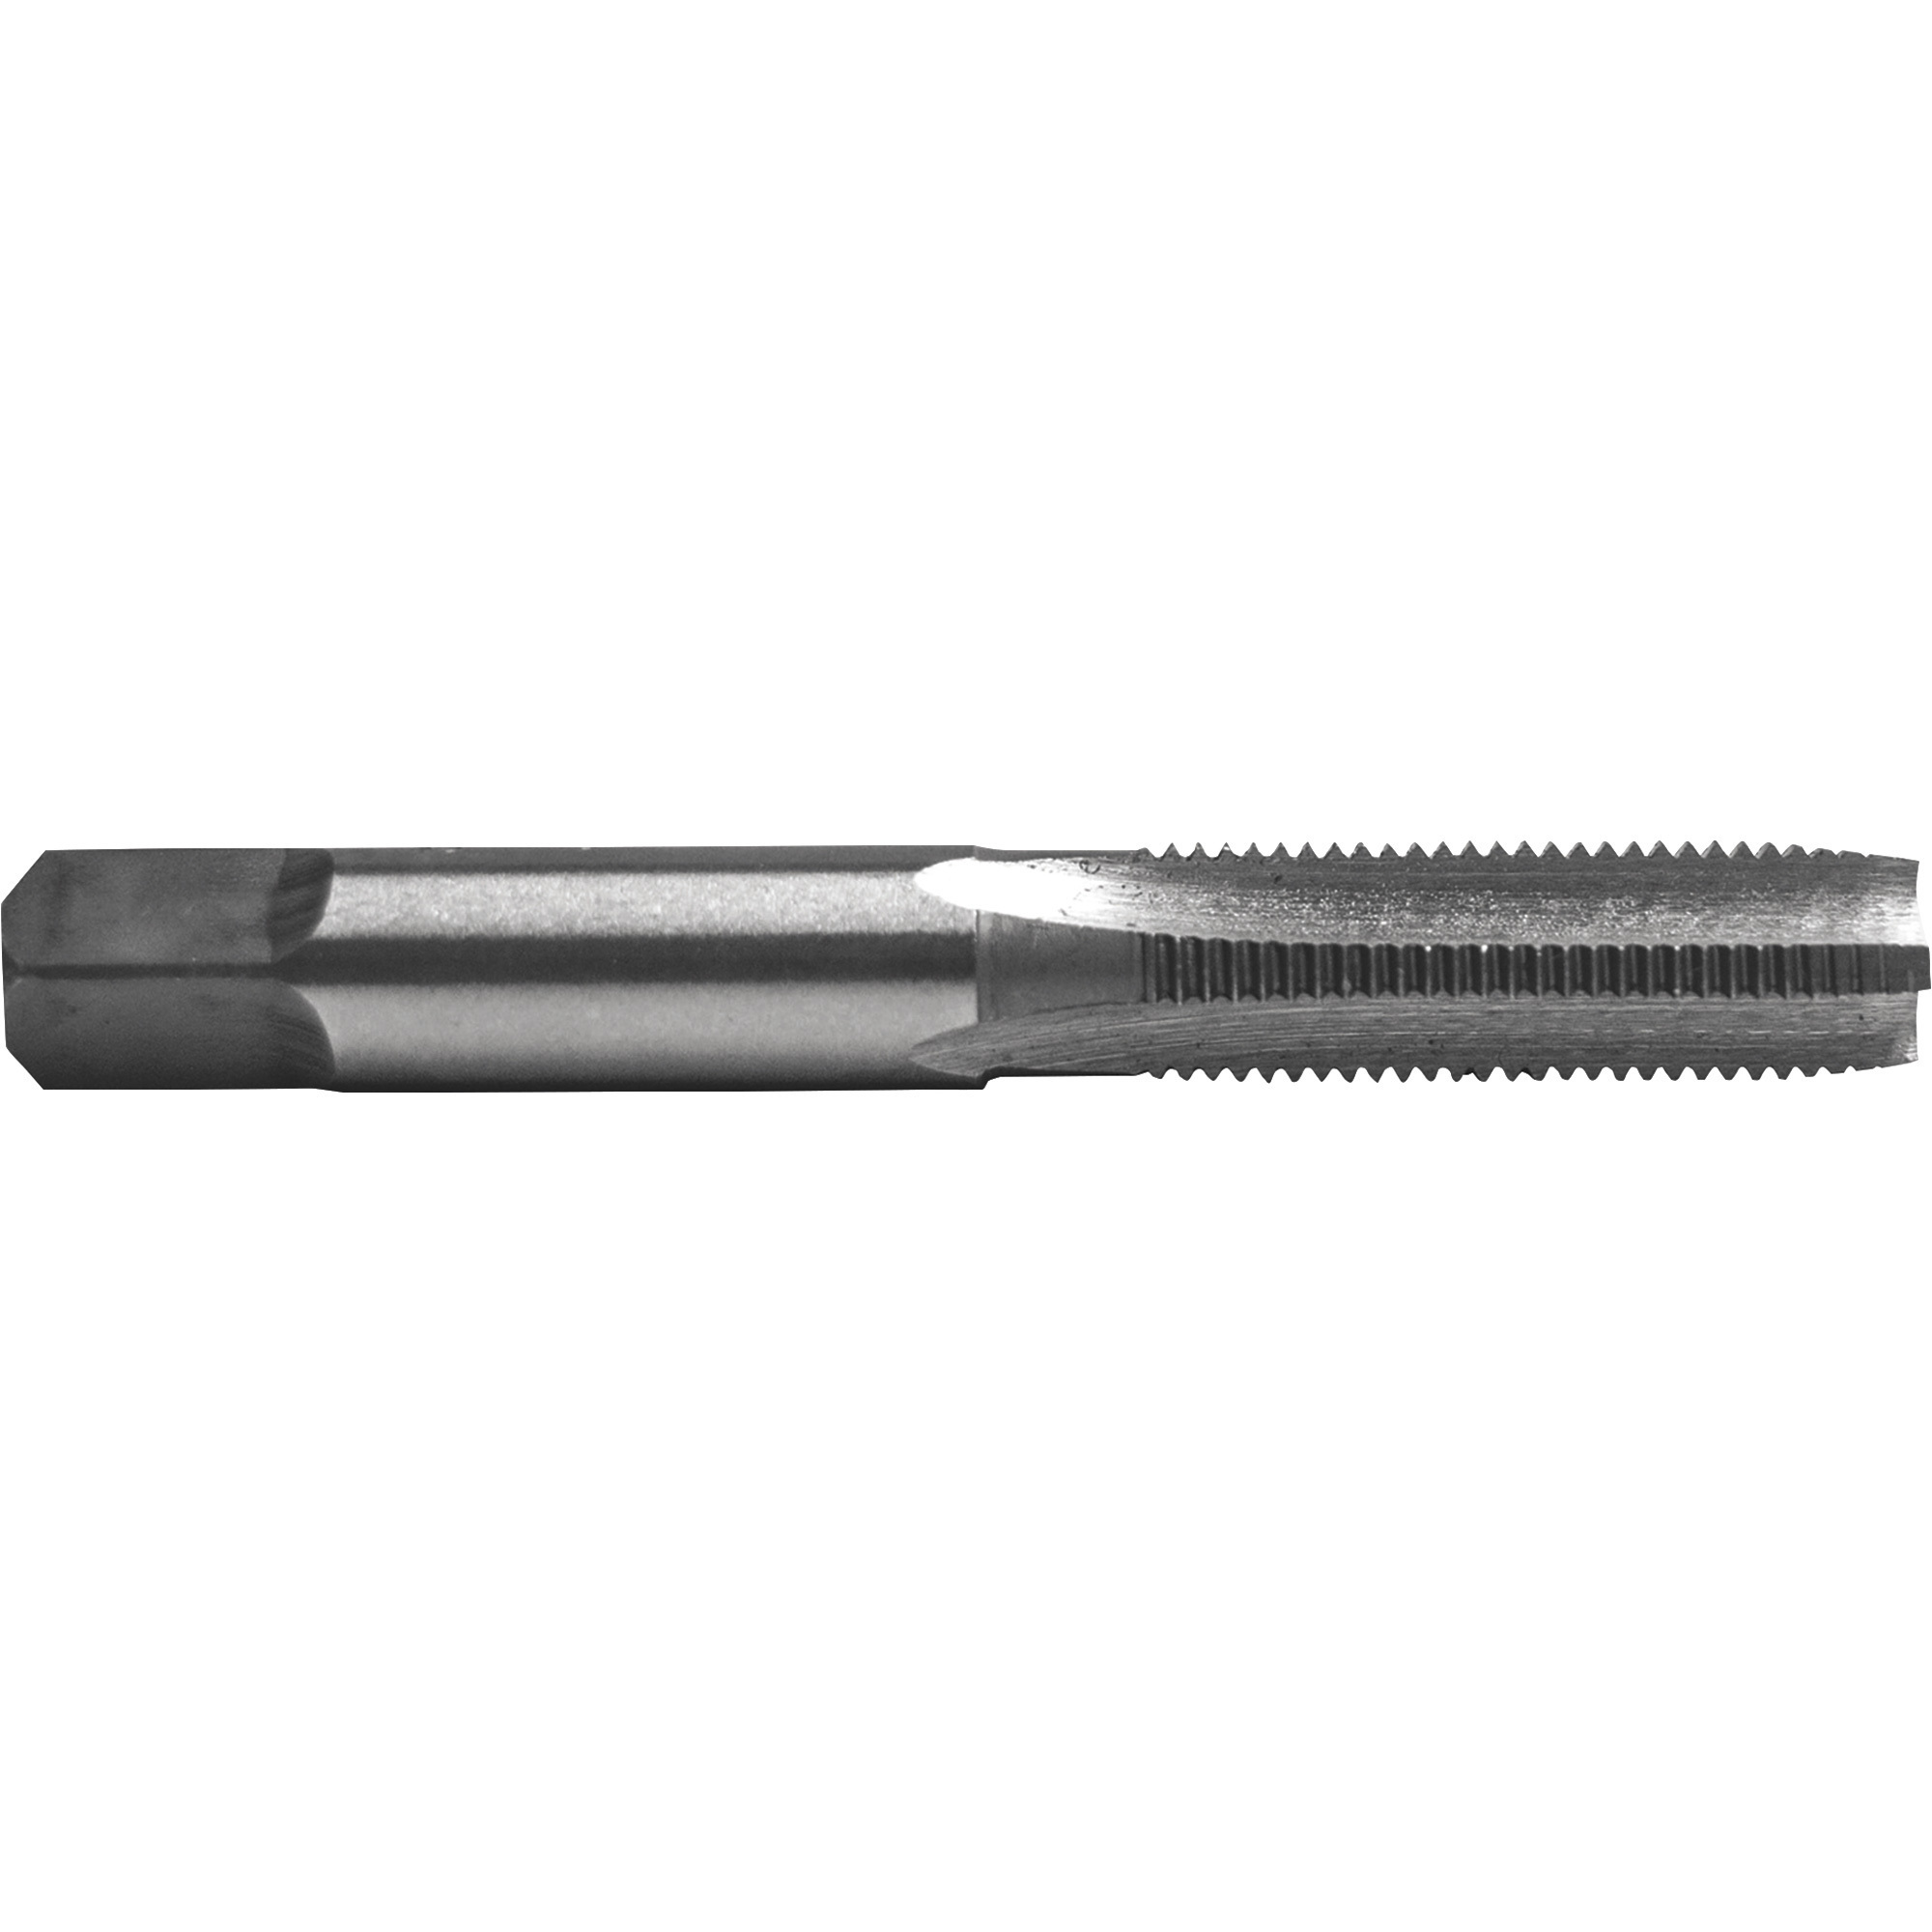 Century Tool Machine Screw Tap, 7/16-20 NF, Model 95110